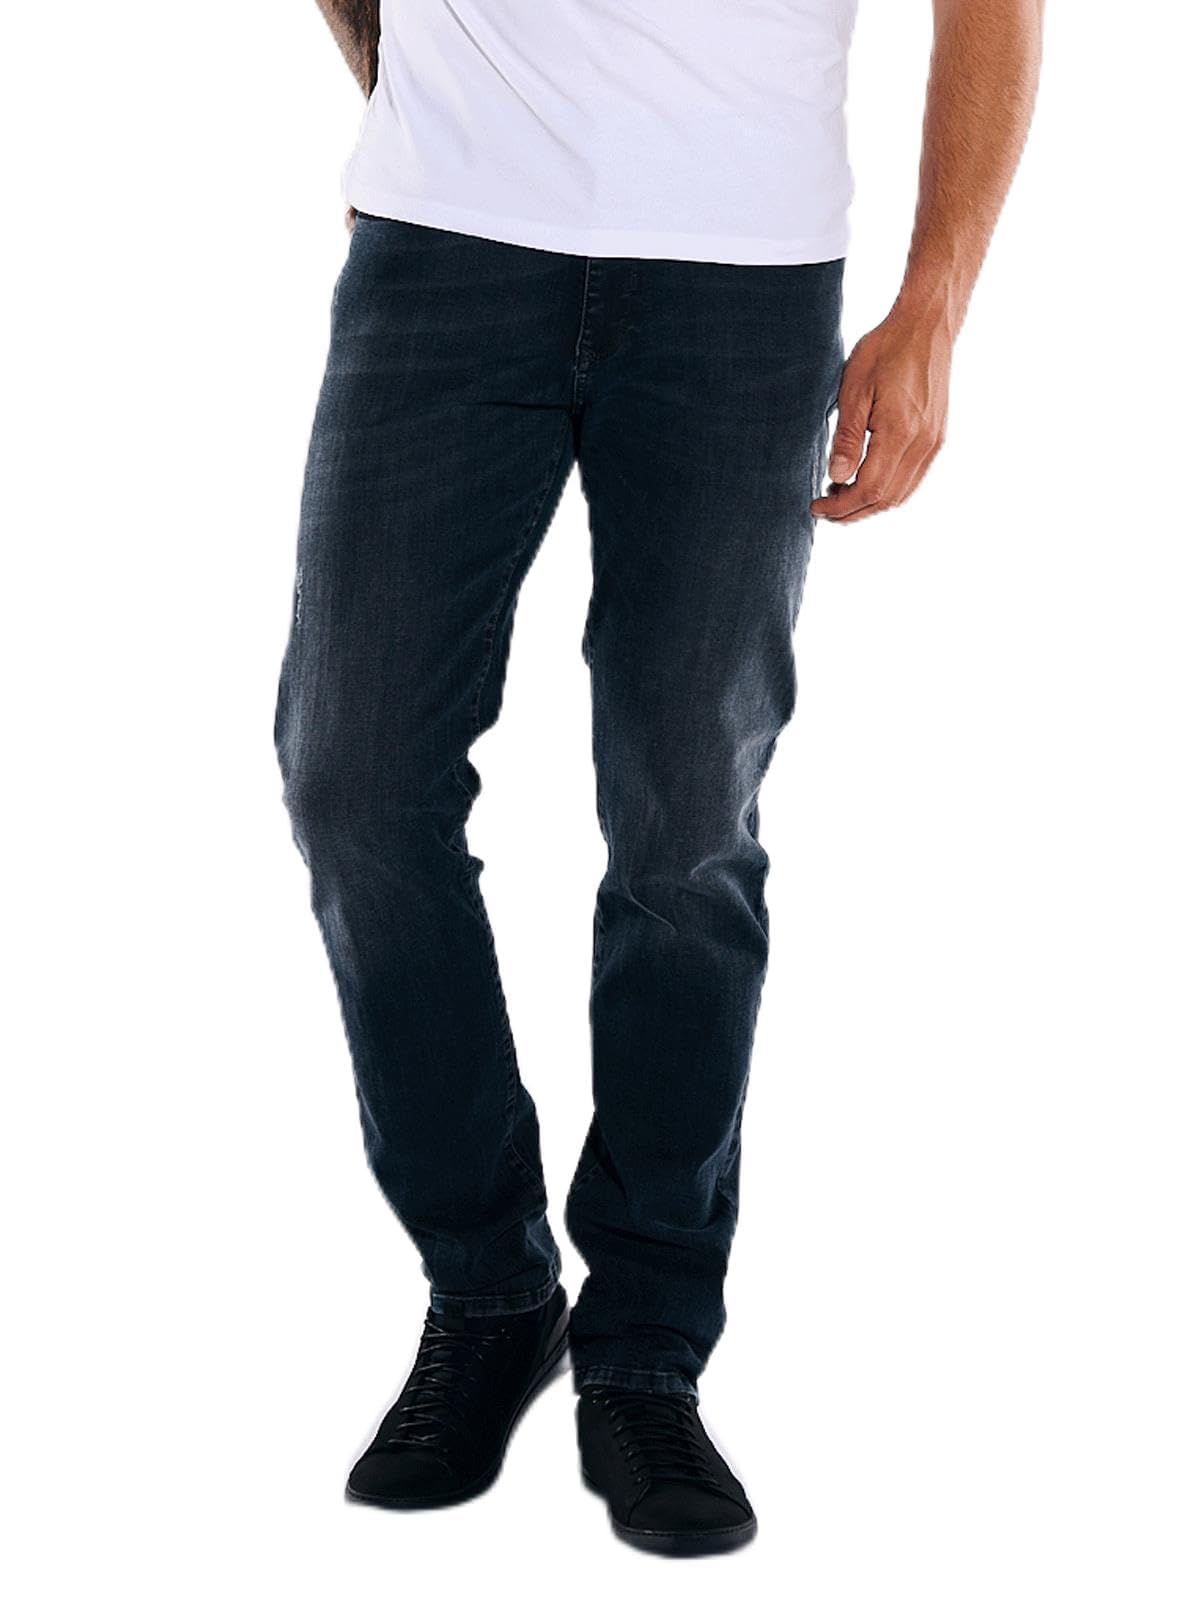 emilio adani Herren Herren Super-Stretch-Jeans Slim fit, 35501, 35501, Saphirblau in Größe 34/32